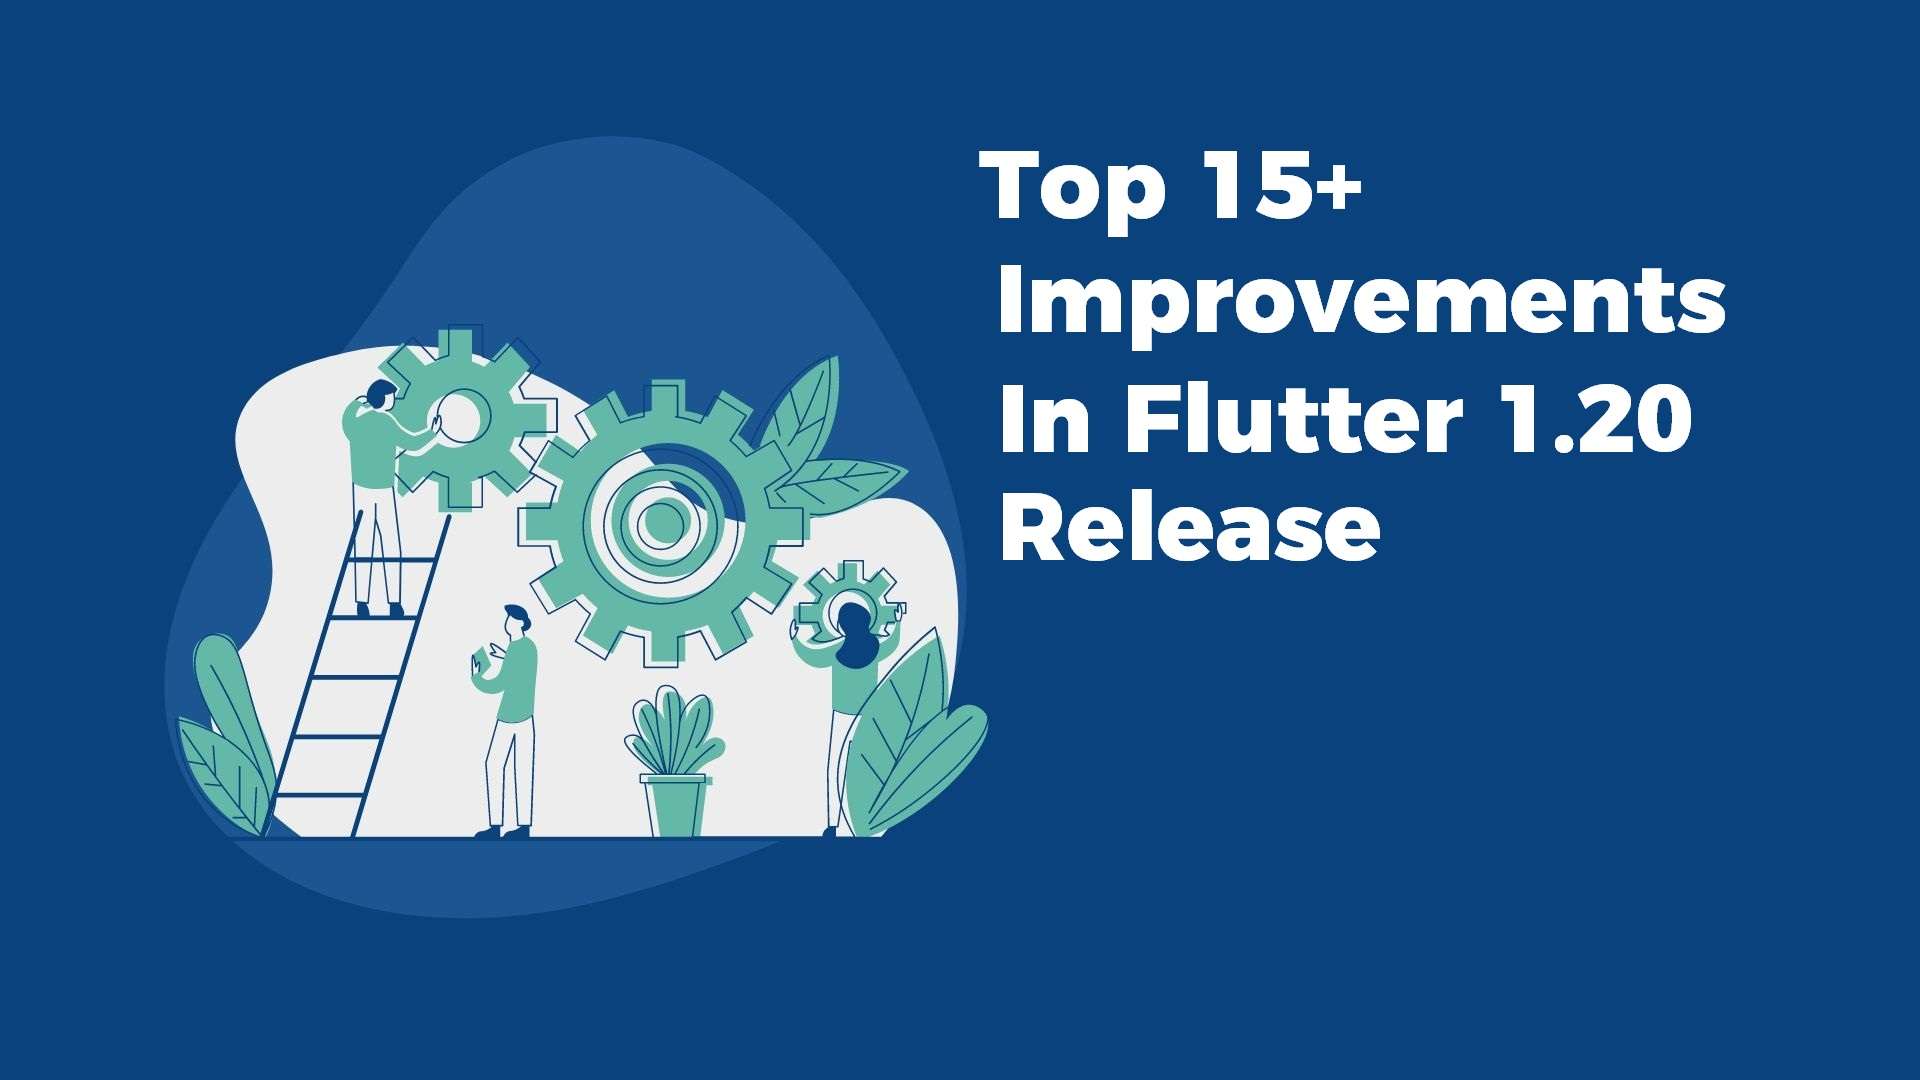 Major Improvements With Flutter 1.20